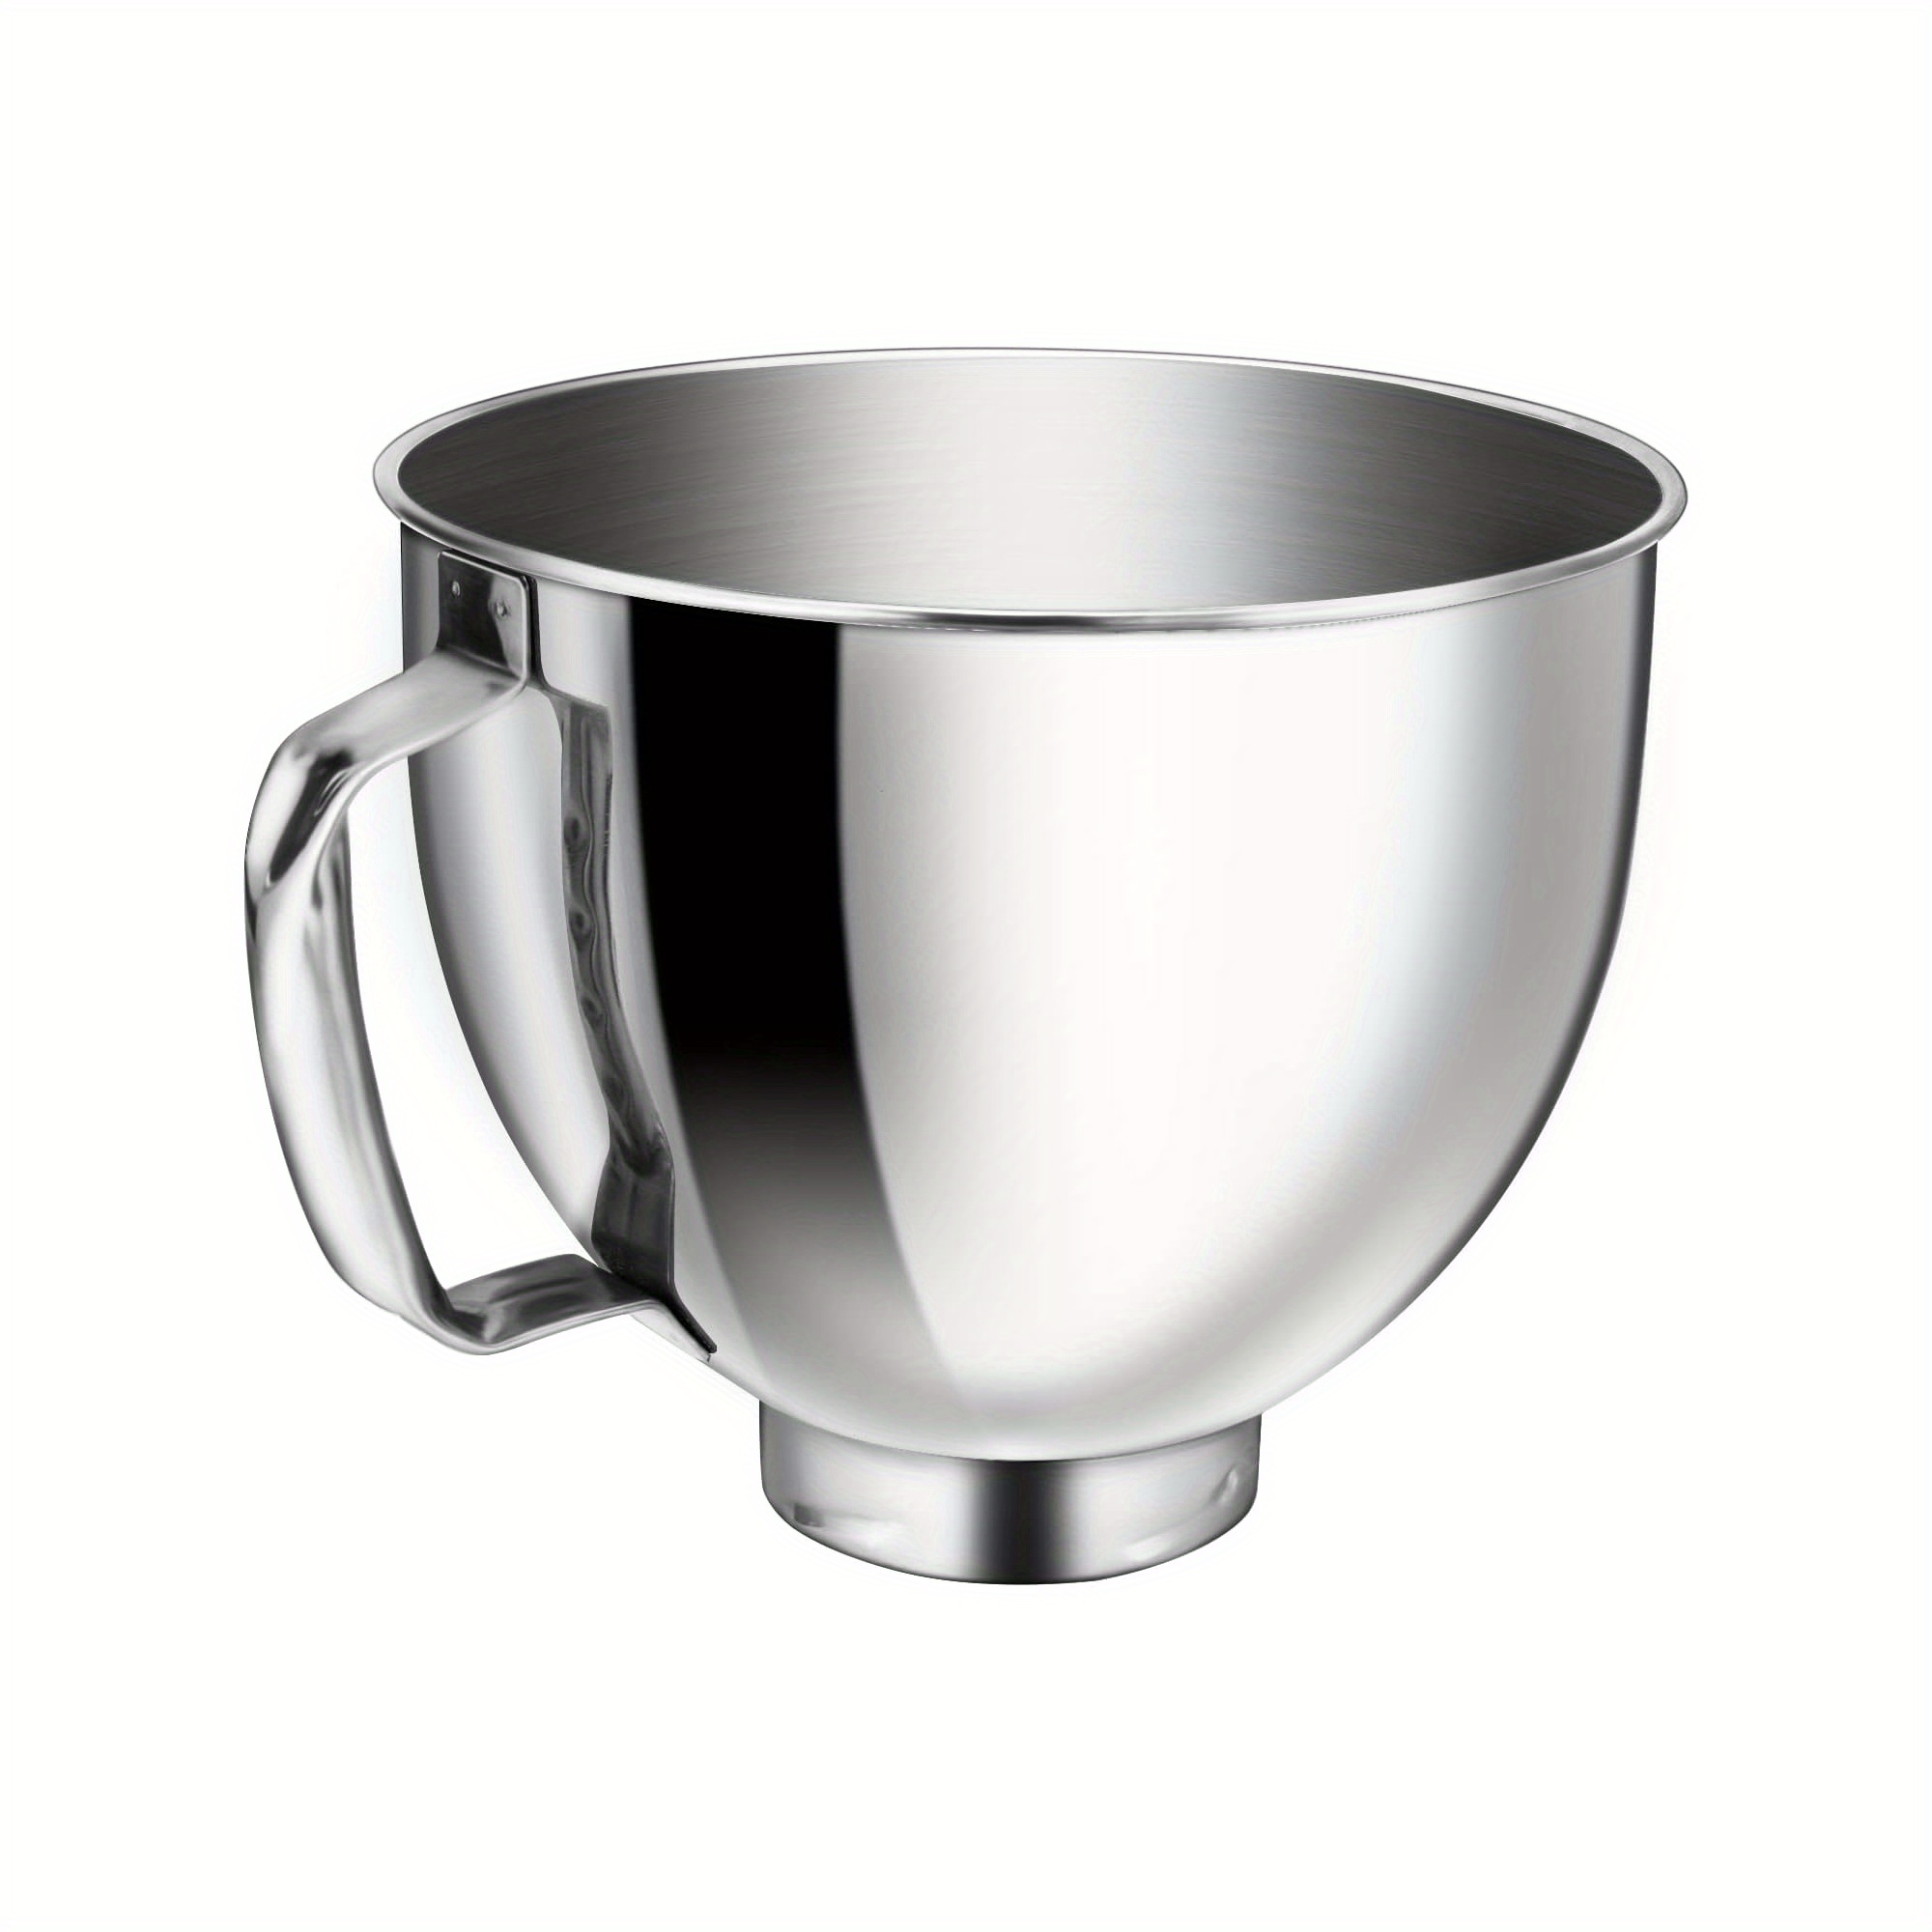 Buy the KitchenAid Stainless Bowl W/Comfort Handle KSM150